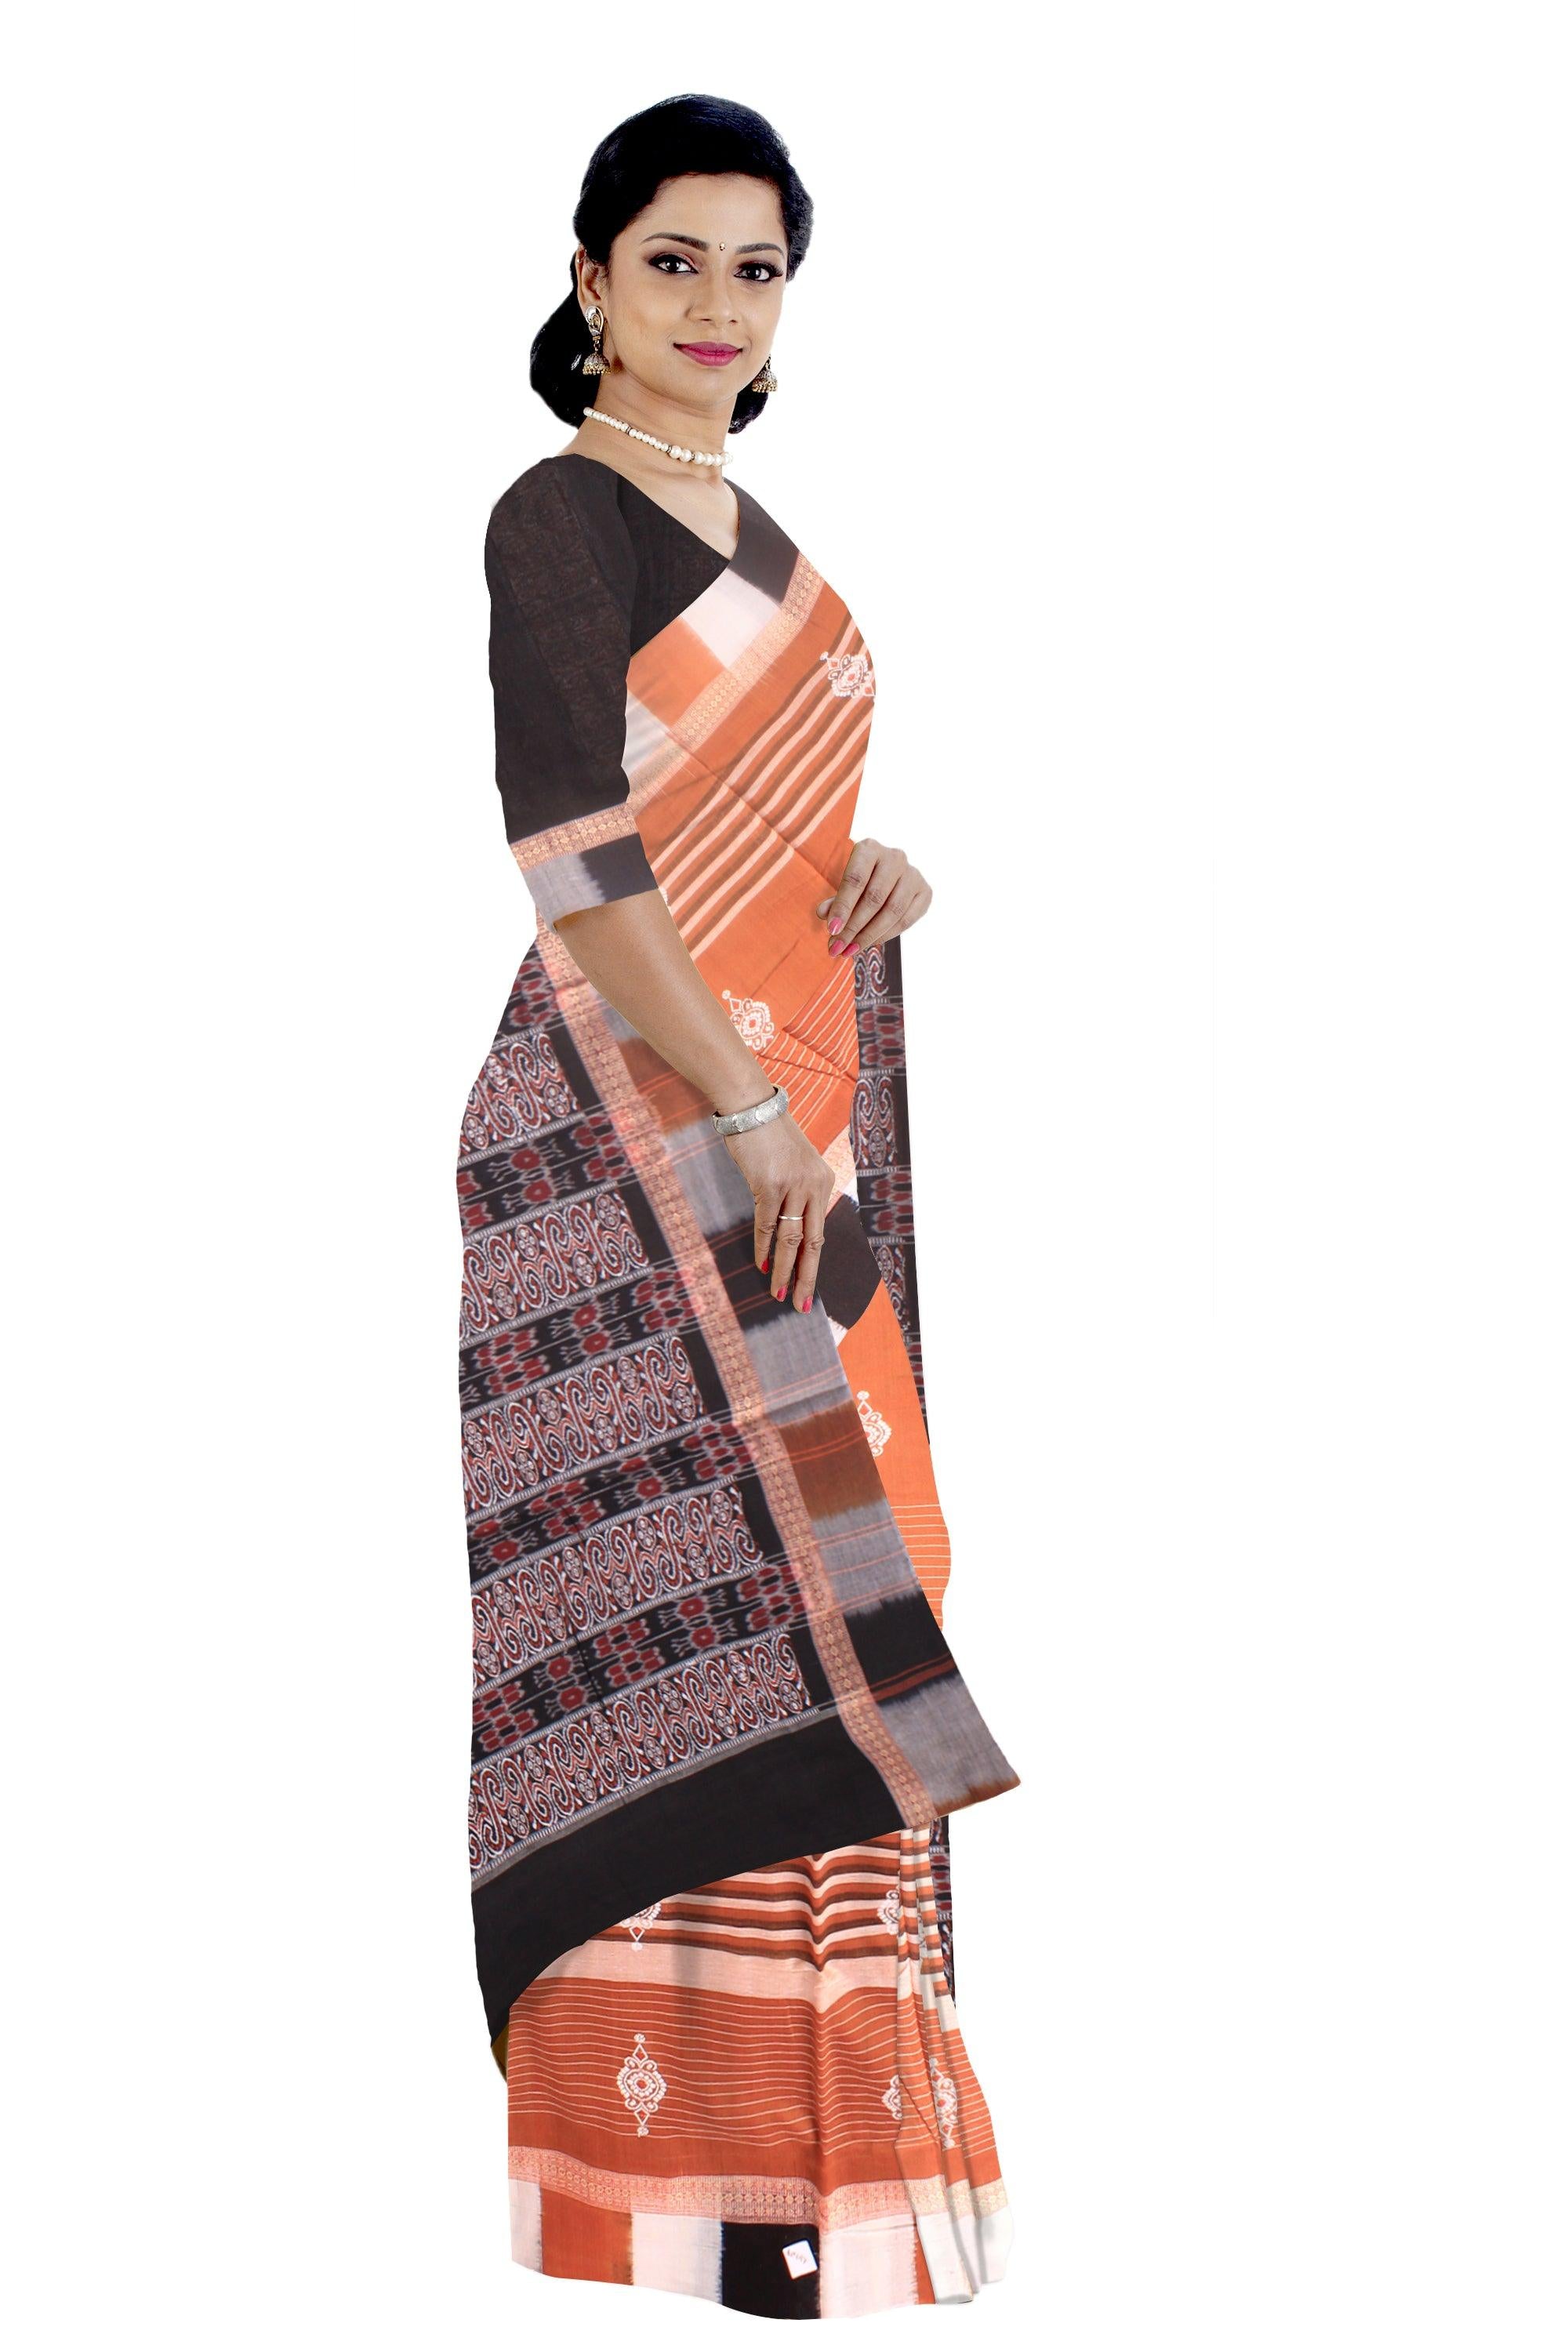 Latest design  Bomkei multicolor border design in Brown and Black color with blouse piece. - Koshali Arts & Crafts Enterprise